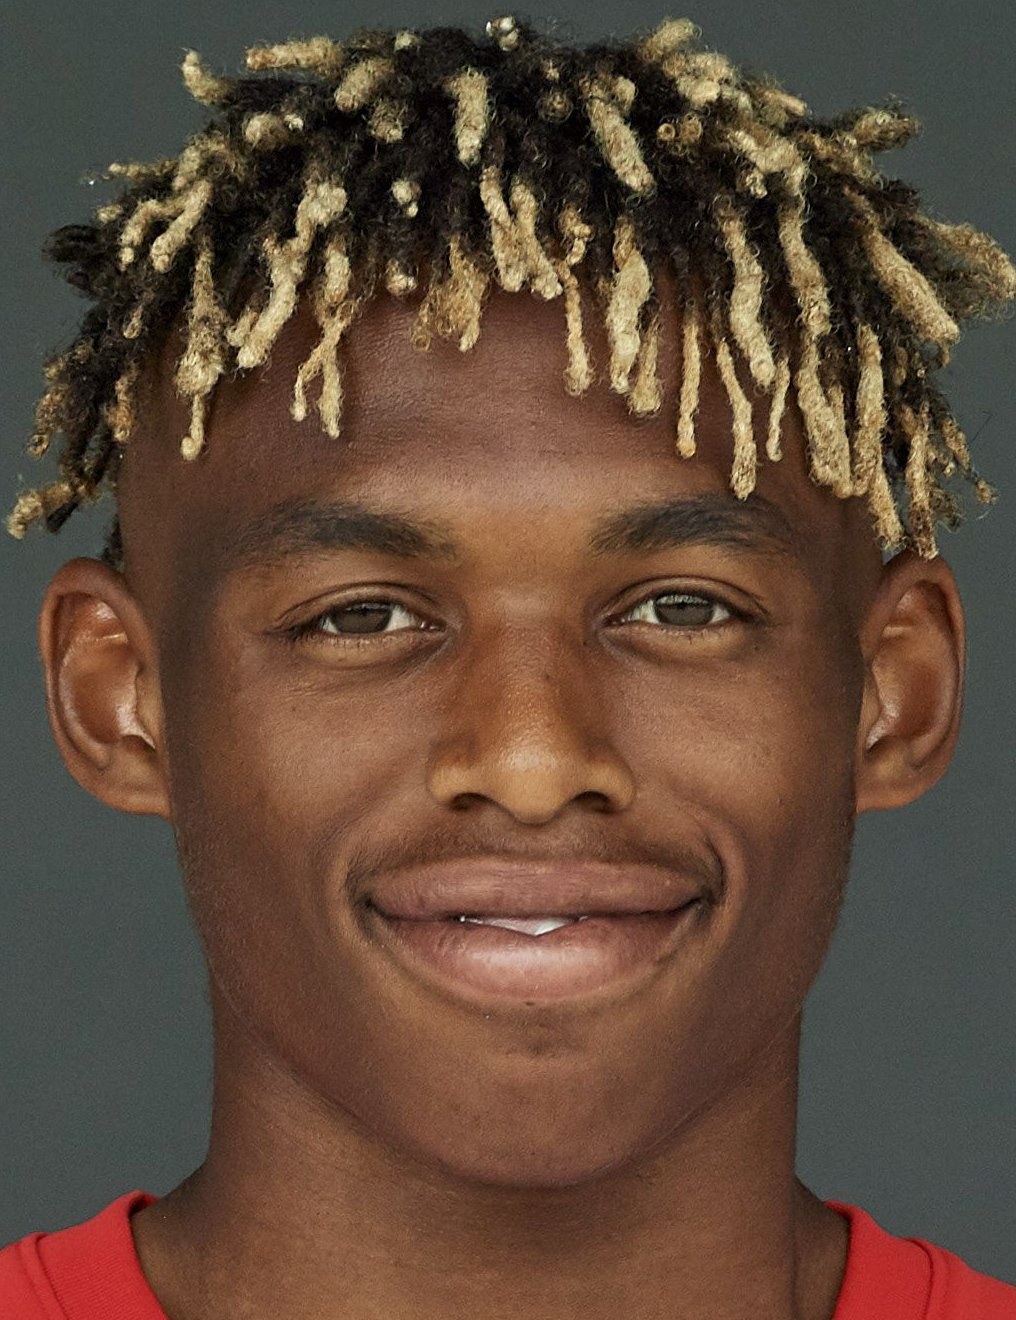 Chukwubuike Adamu - Profil du joueur 19/20 | Transfermarkt